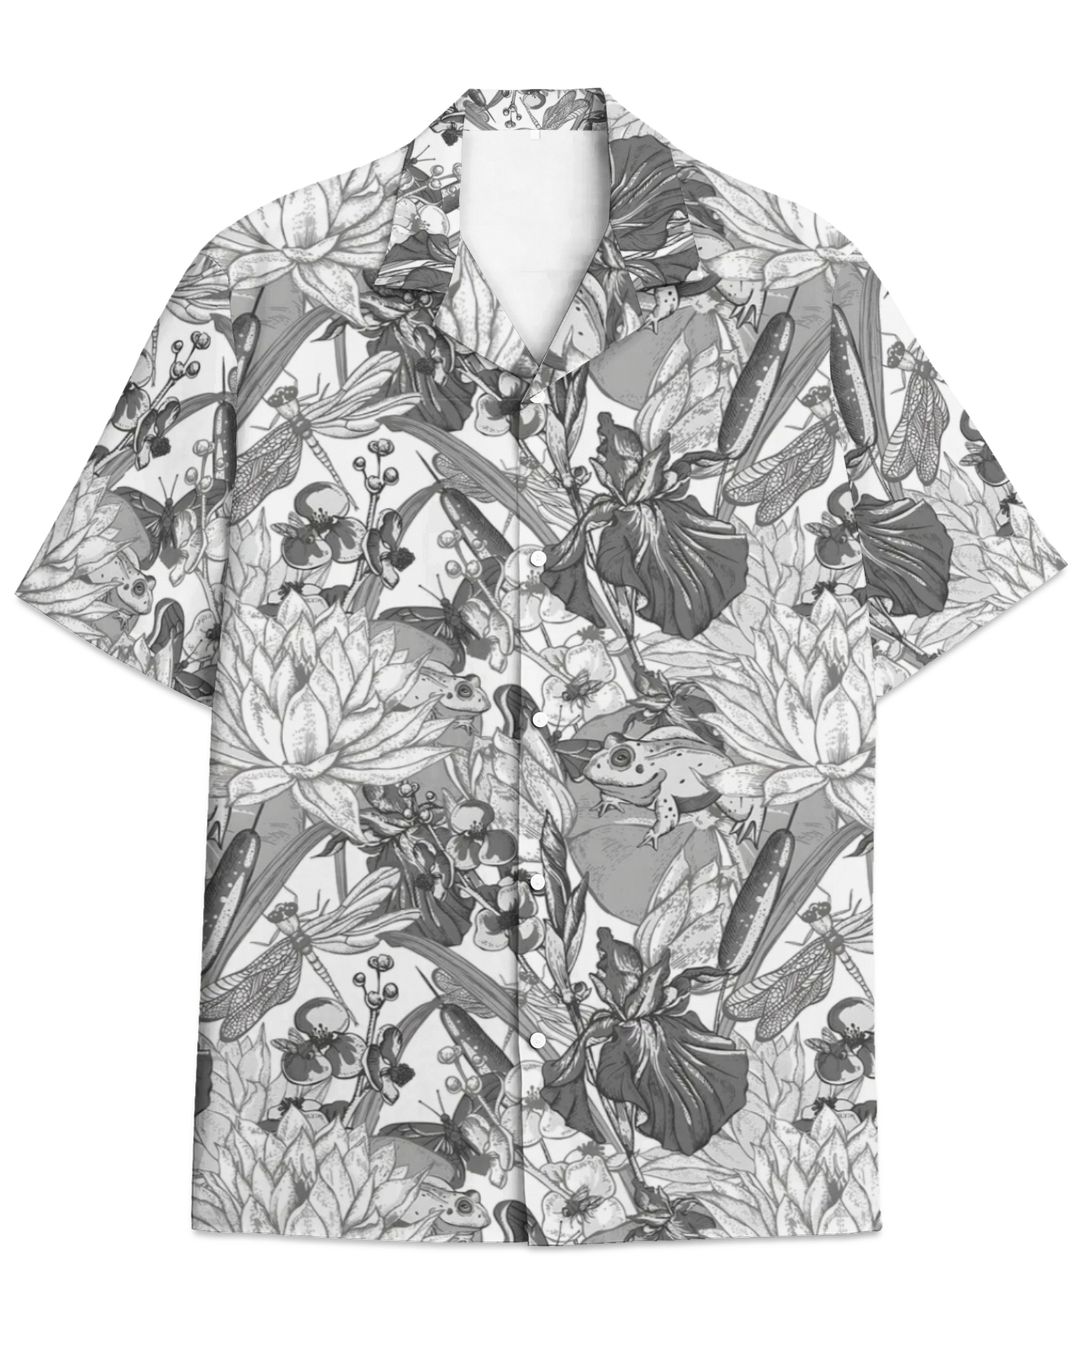 Black And White Hawaiian Shirts | Zazzbase.com